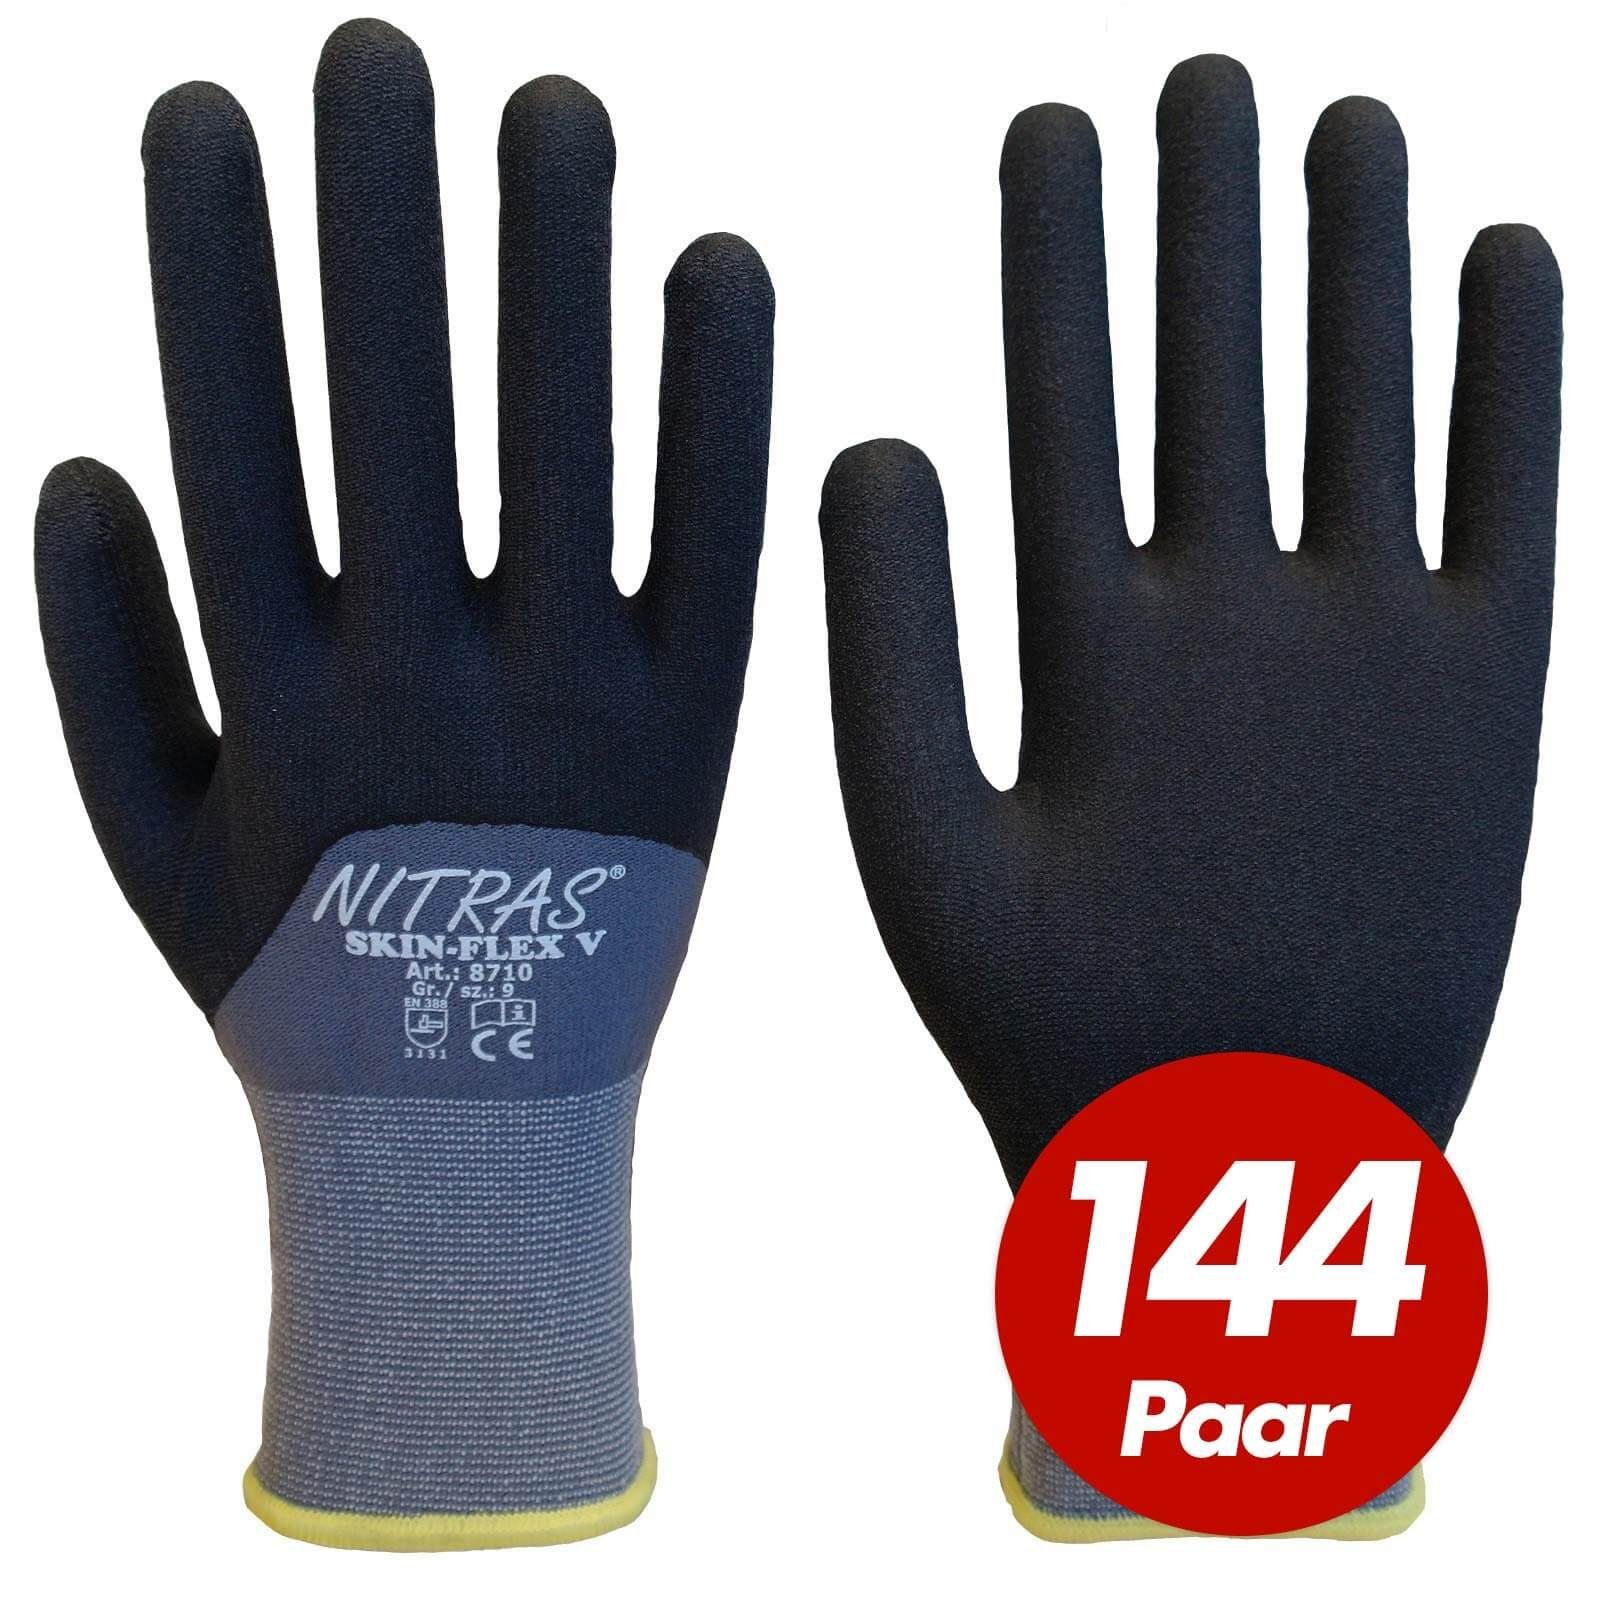 Nitril-Handschuhe (Spar-Set) NITRAS Skin-Flex Nitras 144 Spezalbeschichtung V Paar 8710 Strickhandschuhe,